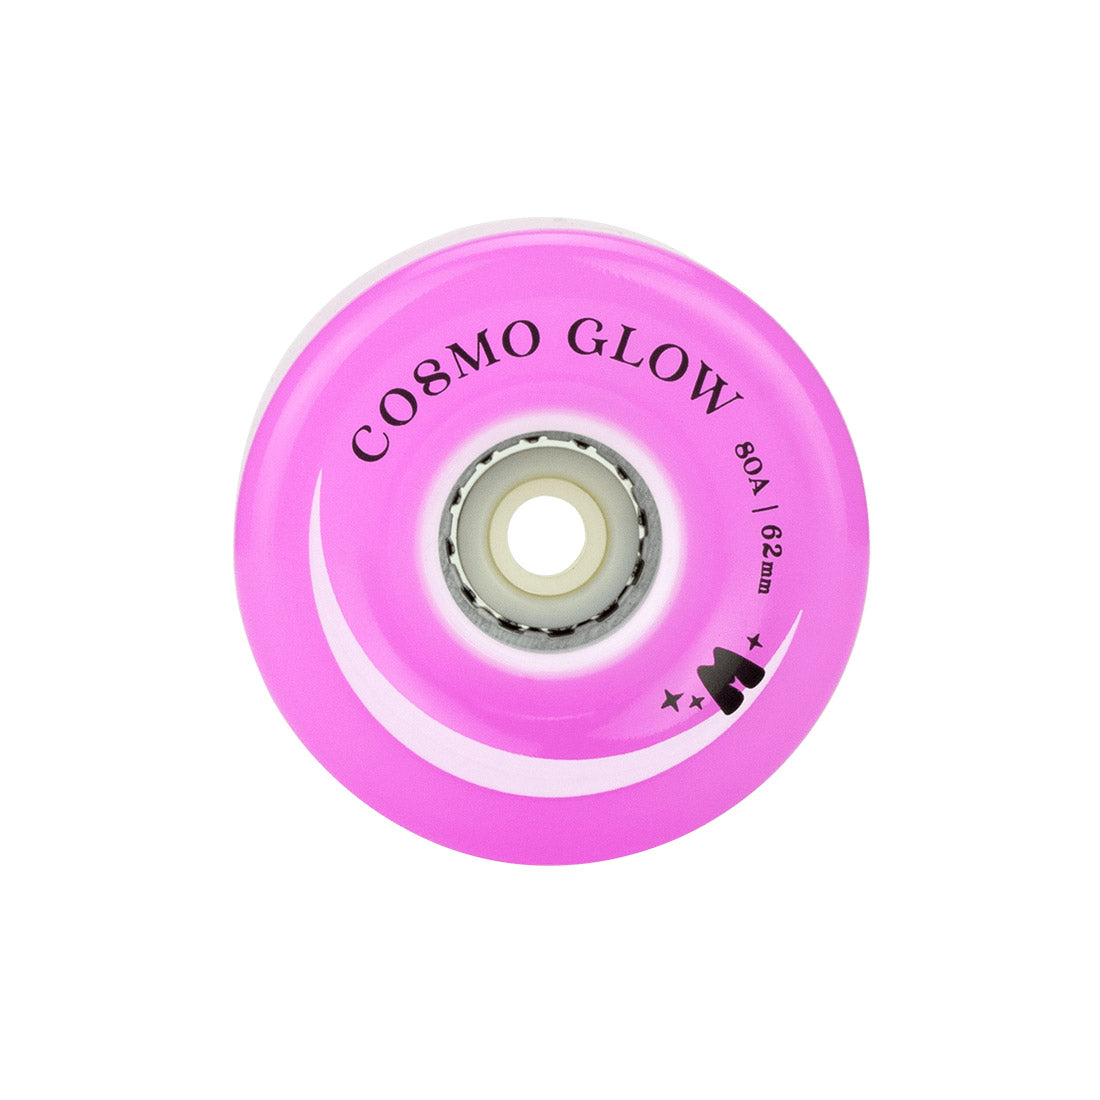 Moxi Cosmo Glow LED 62mm 80a Wheels 4pk Purple Haze Roller Skate Wheels